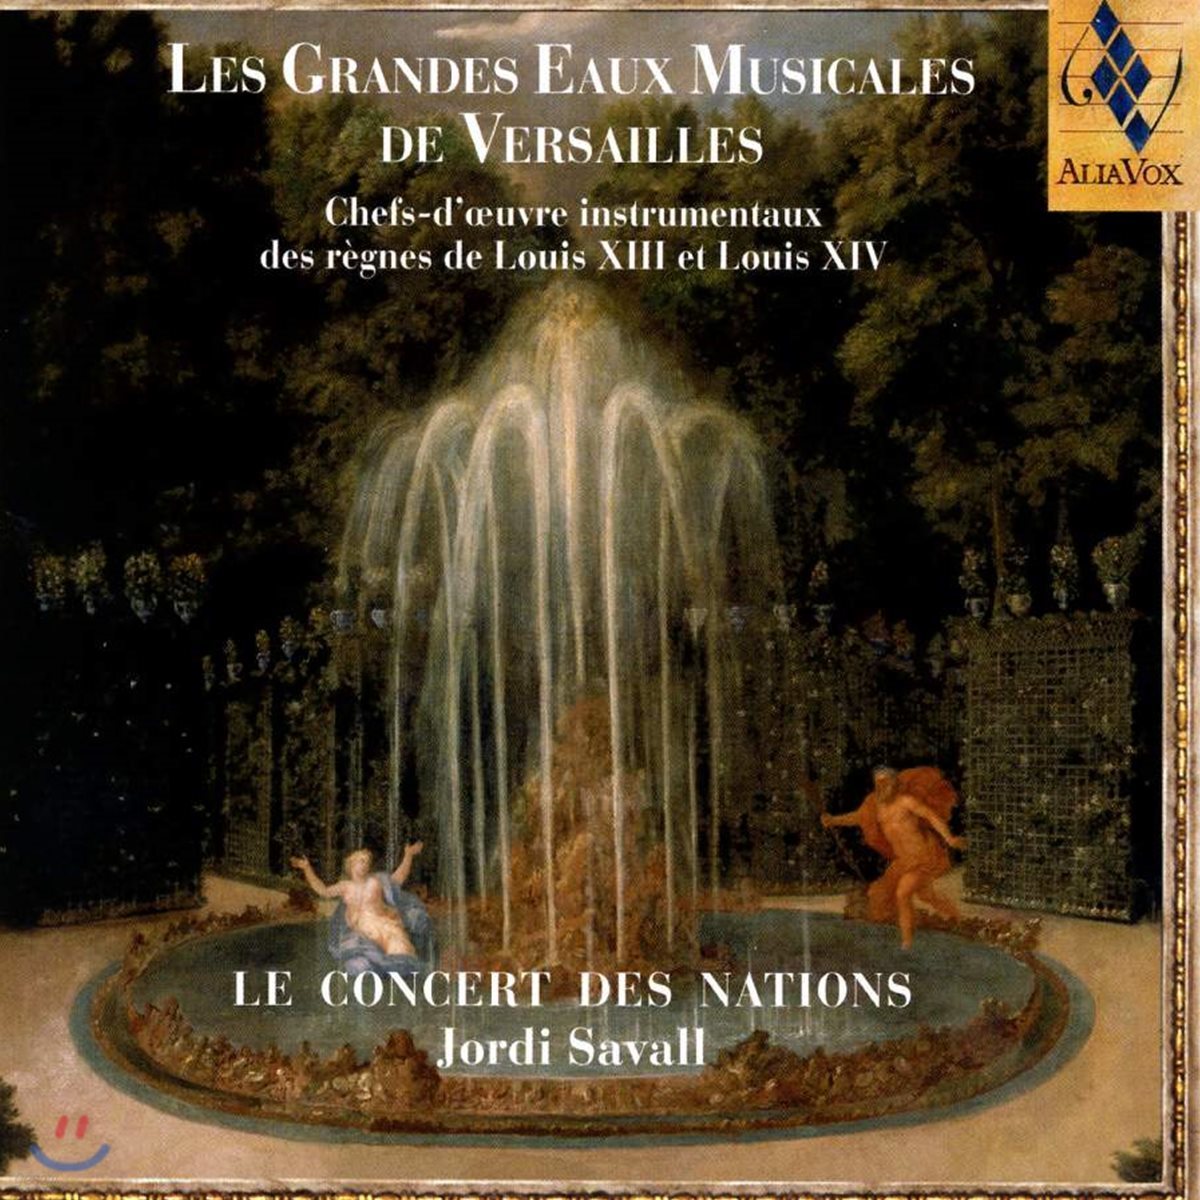 Jordi Savall 베르사이유의 거대한 음악 분수 (The Musical Fountains of Versailles)